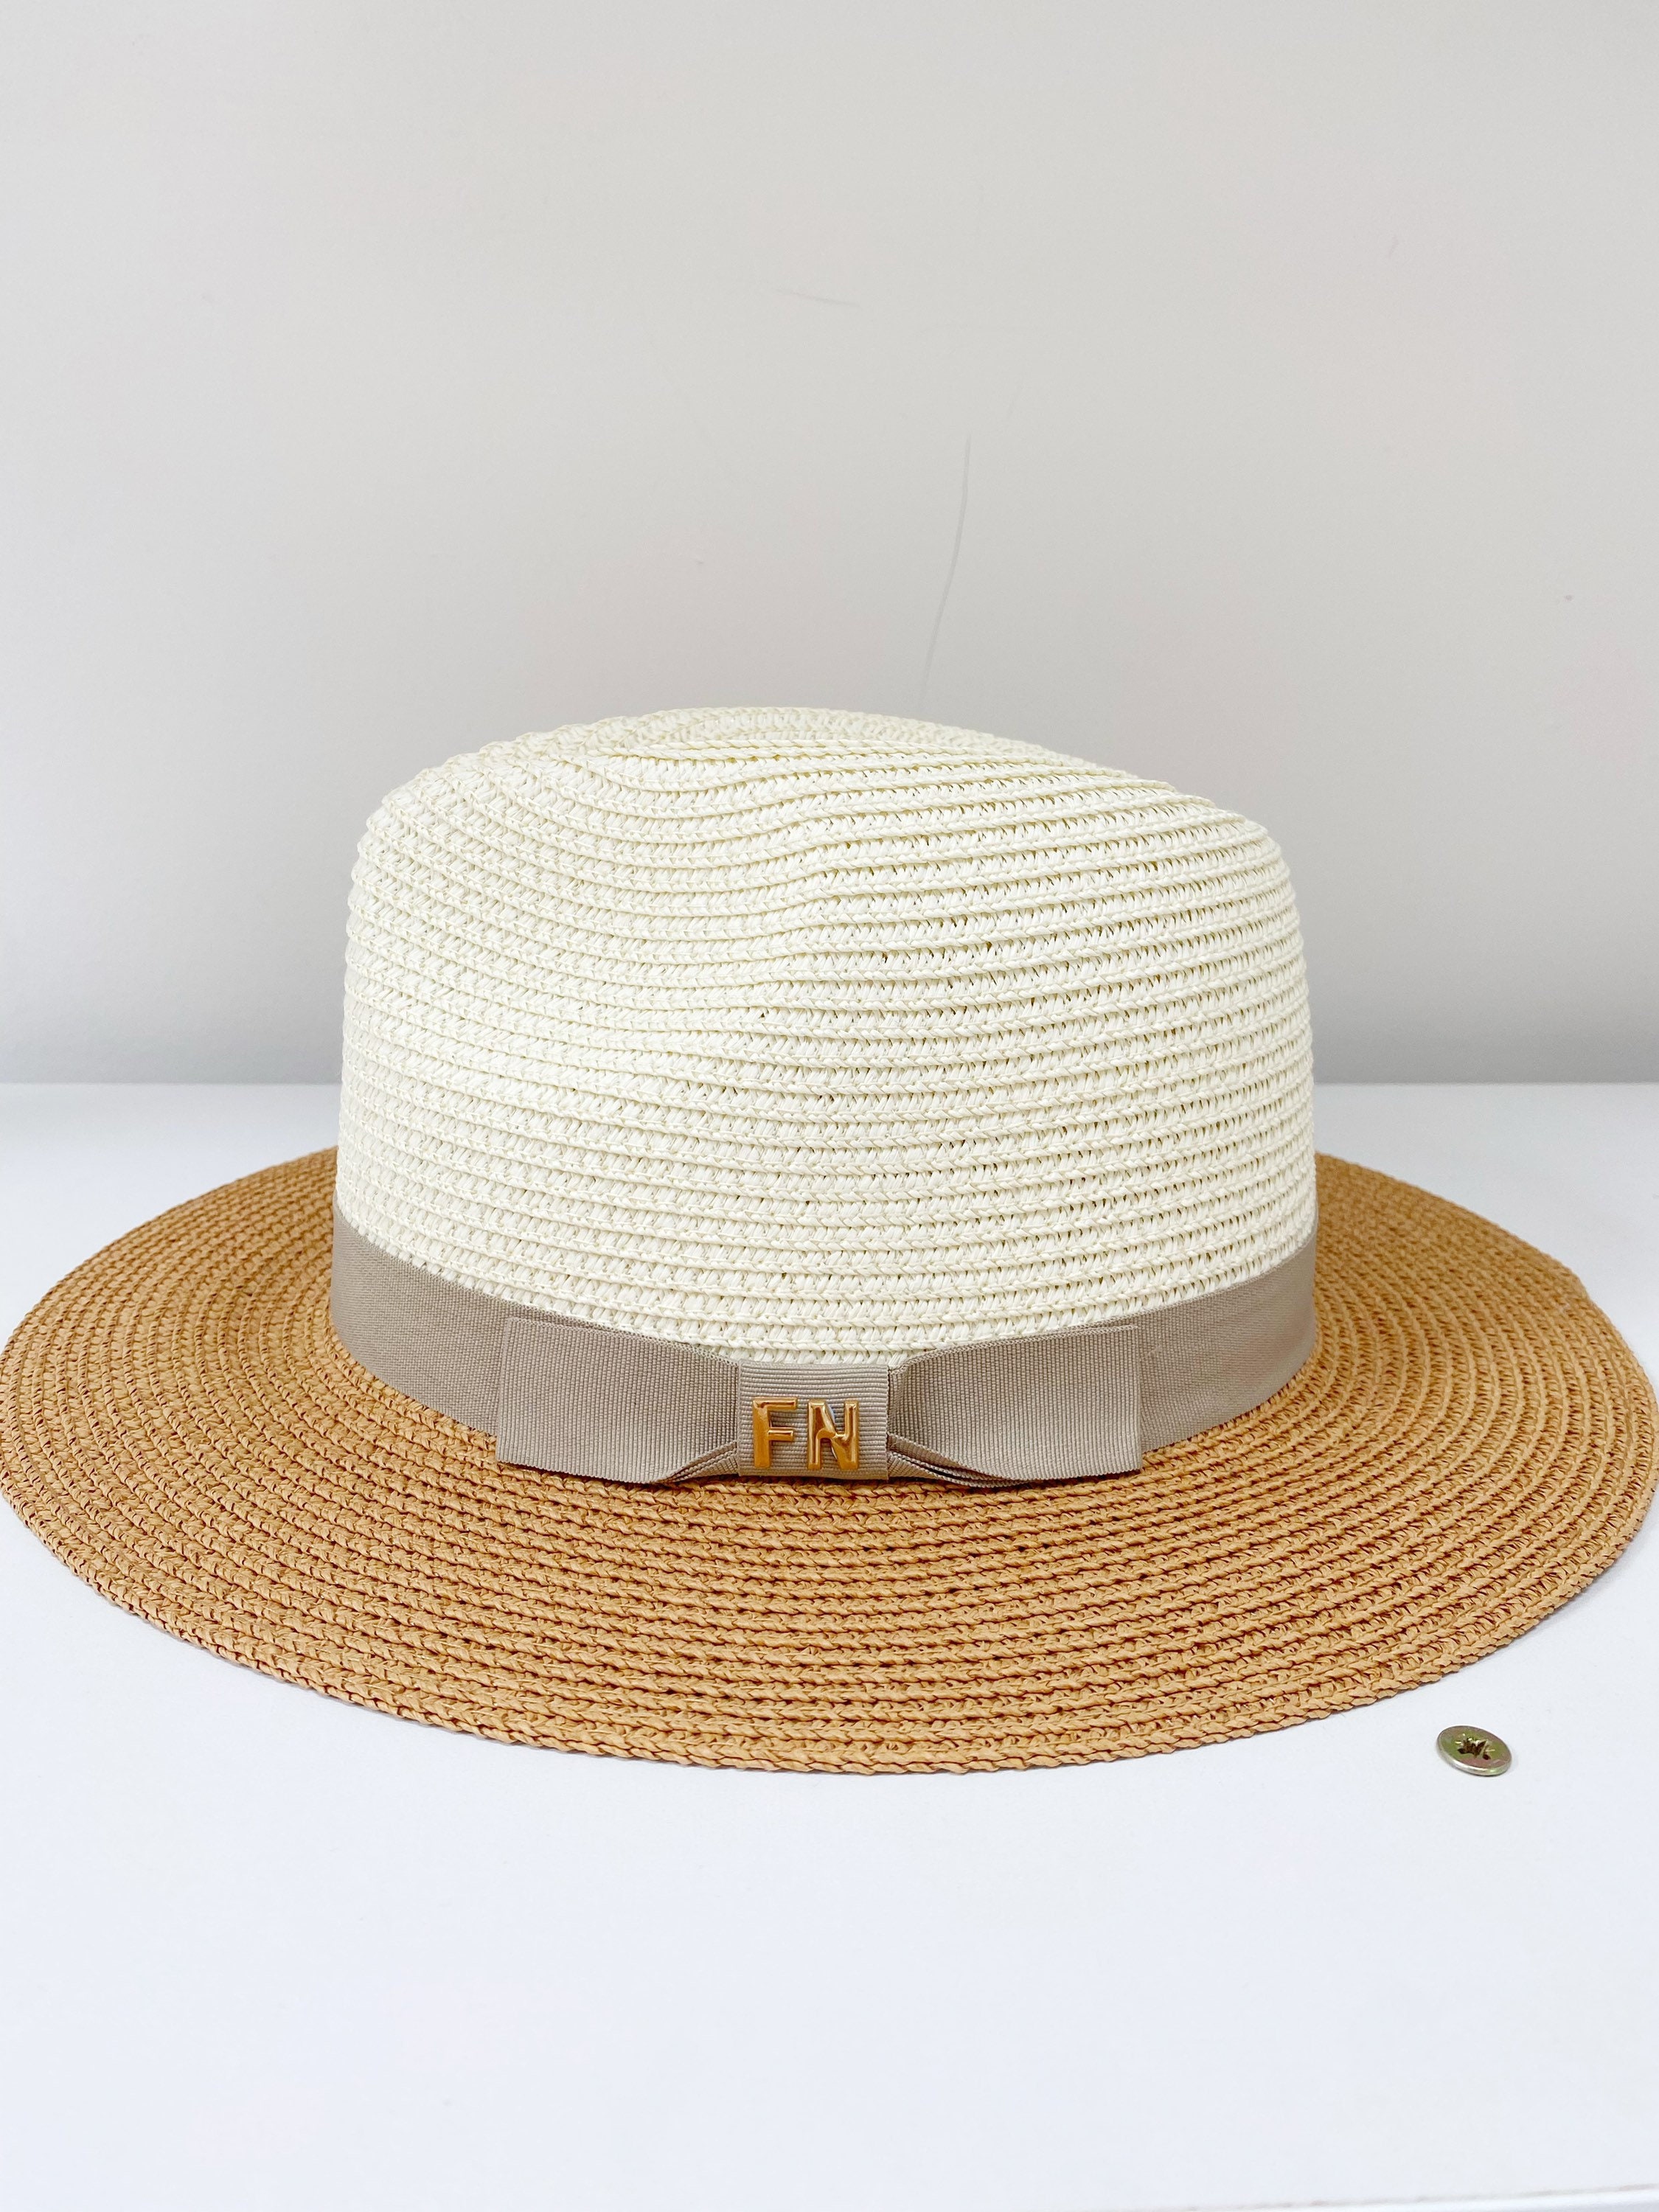 Personalised fedora hat beach hat custom hat ladies straw | Etsy